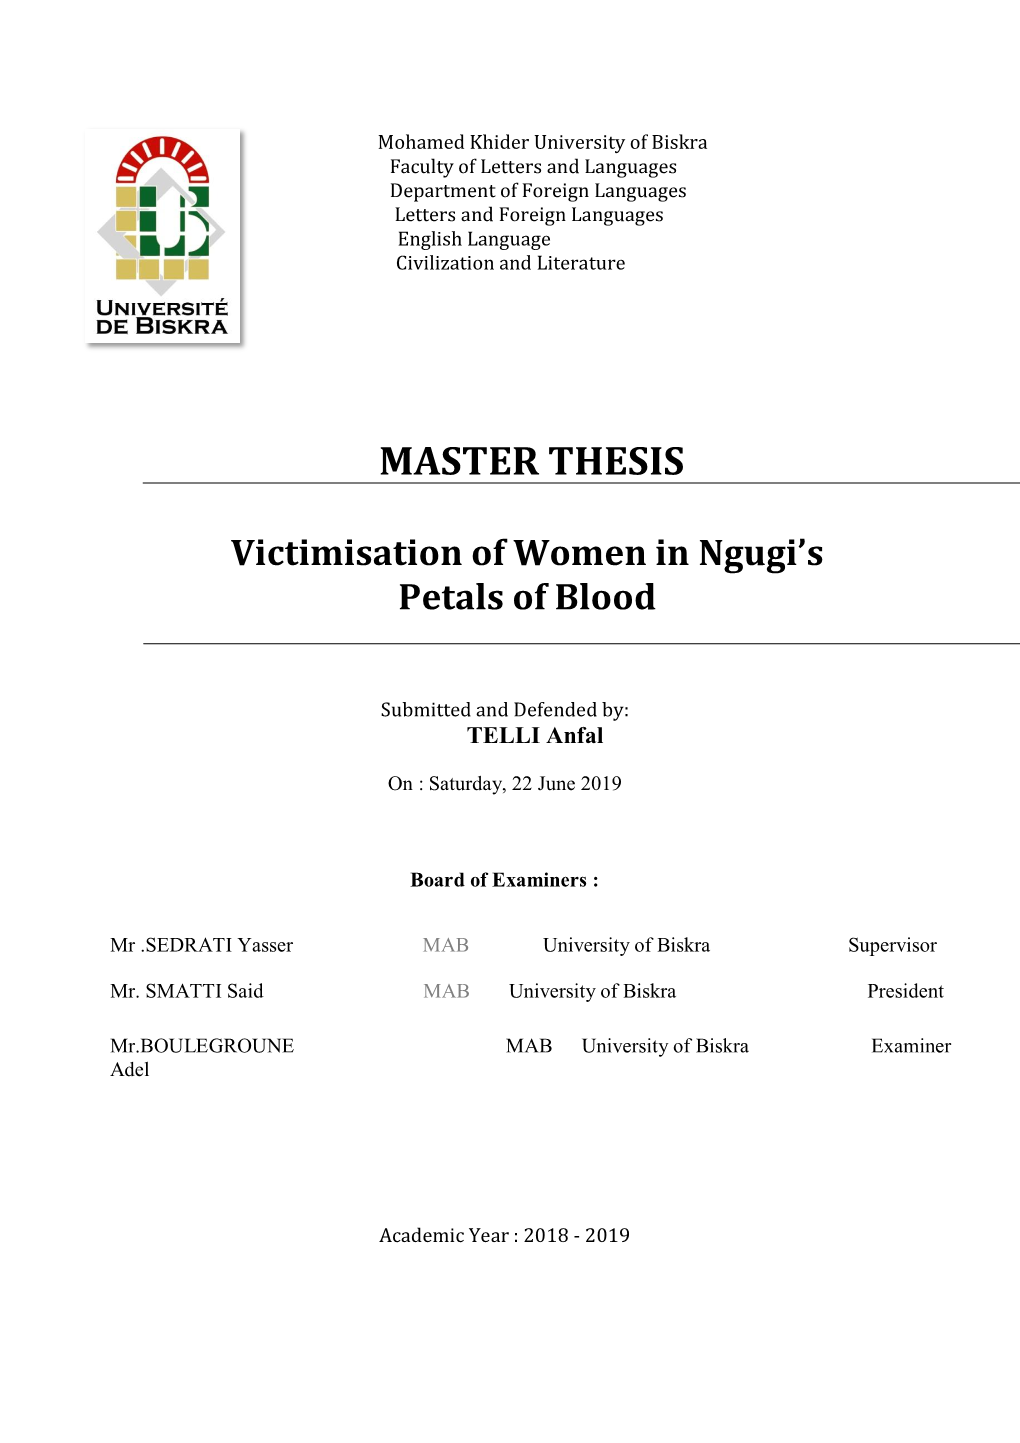 Victimisation of Women in Ngugi's Petals of Blood